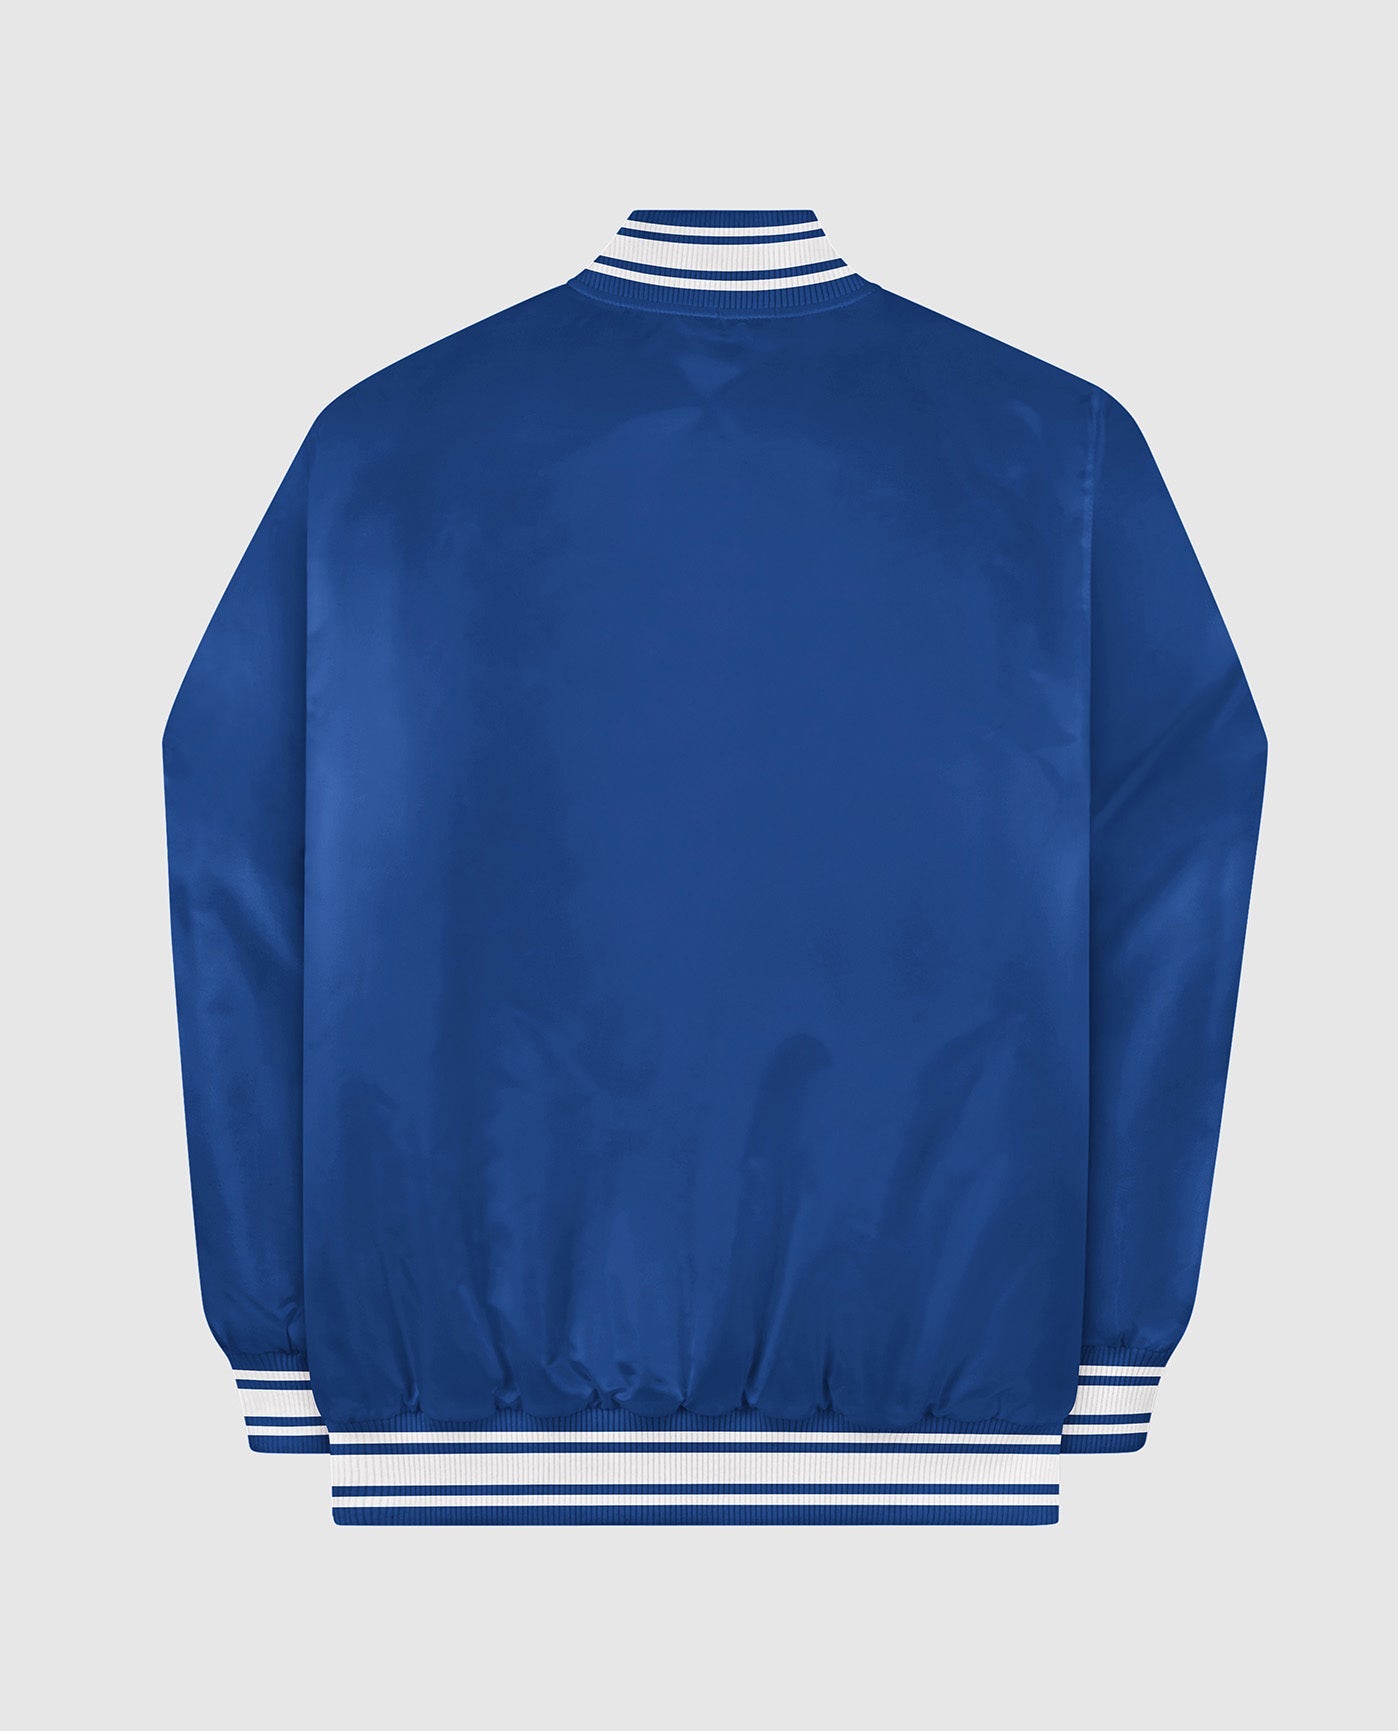 Blue Satin Baseball Jacket